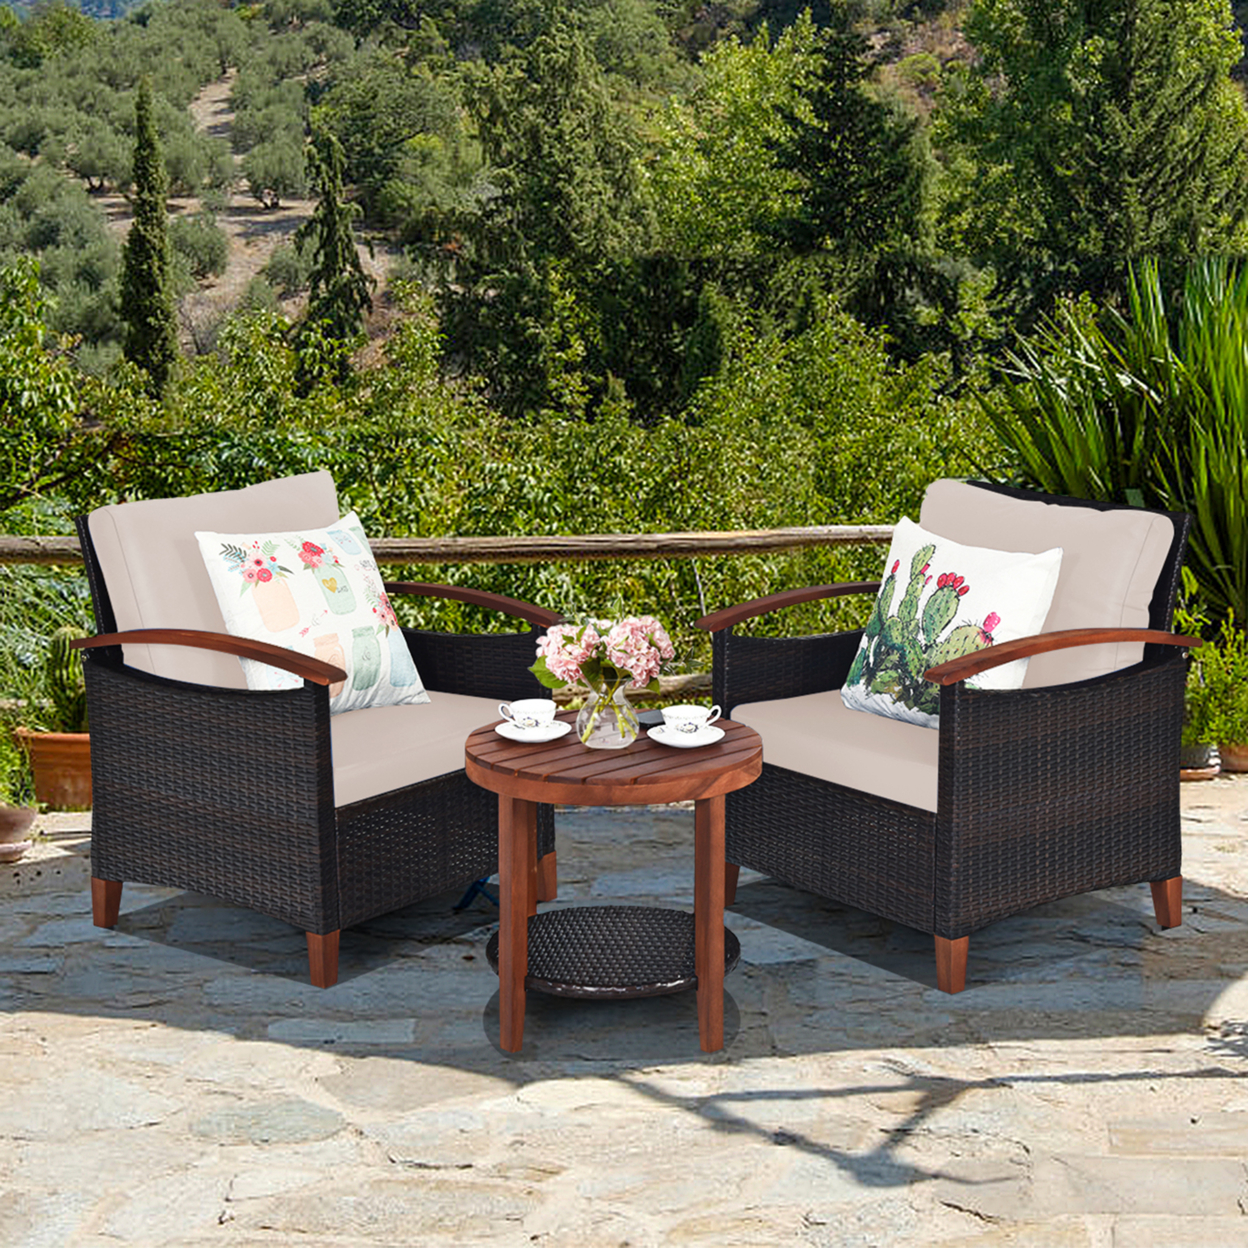 3PCS Patio Wicker Rattan Conversation Set Outdoor Furniture Set W/ Beige Cushion